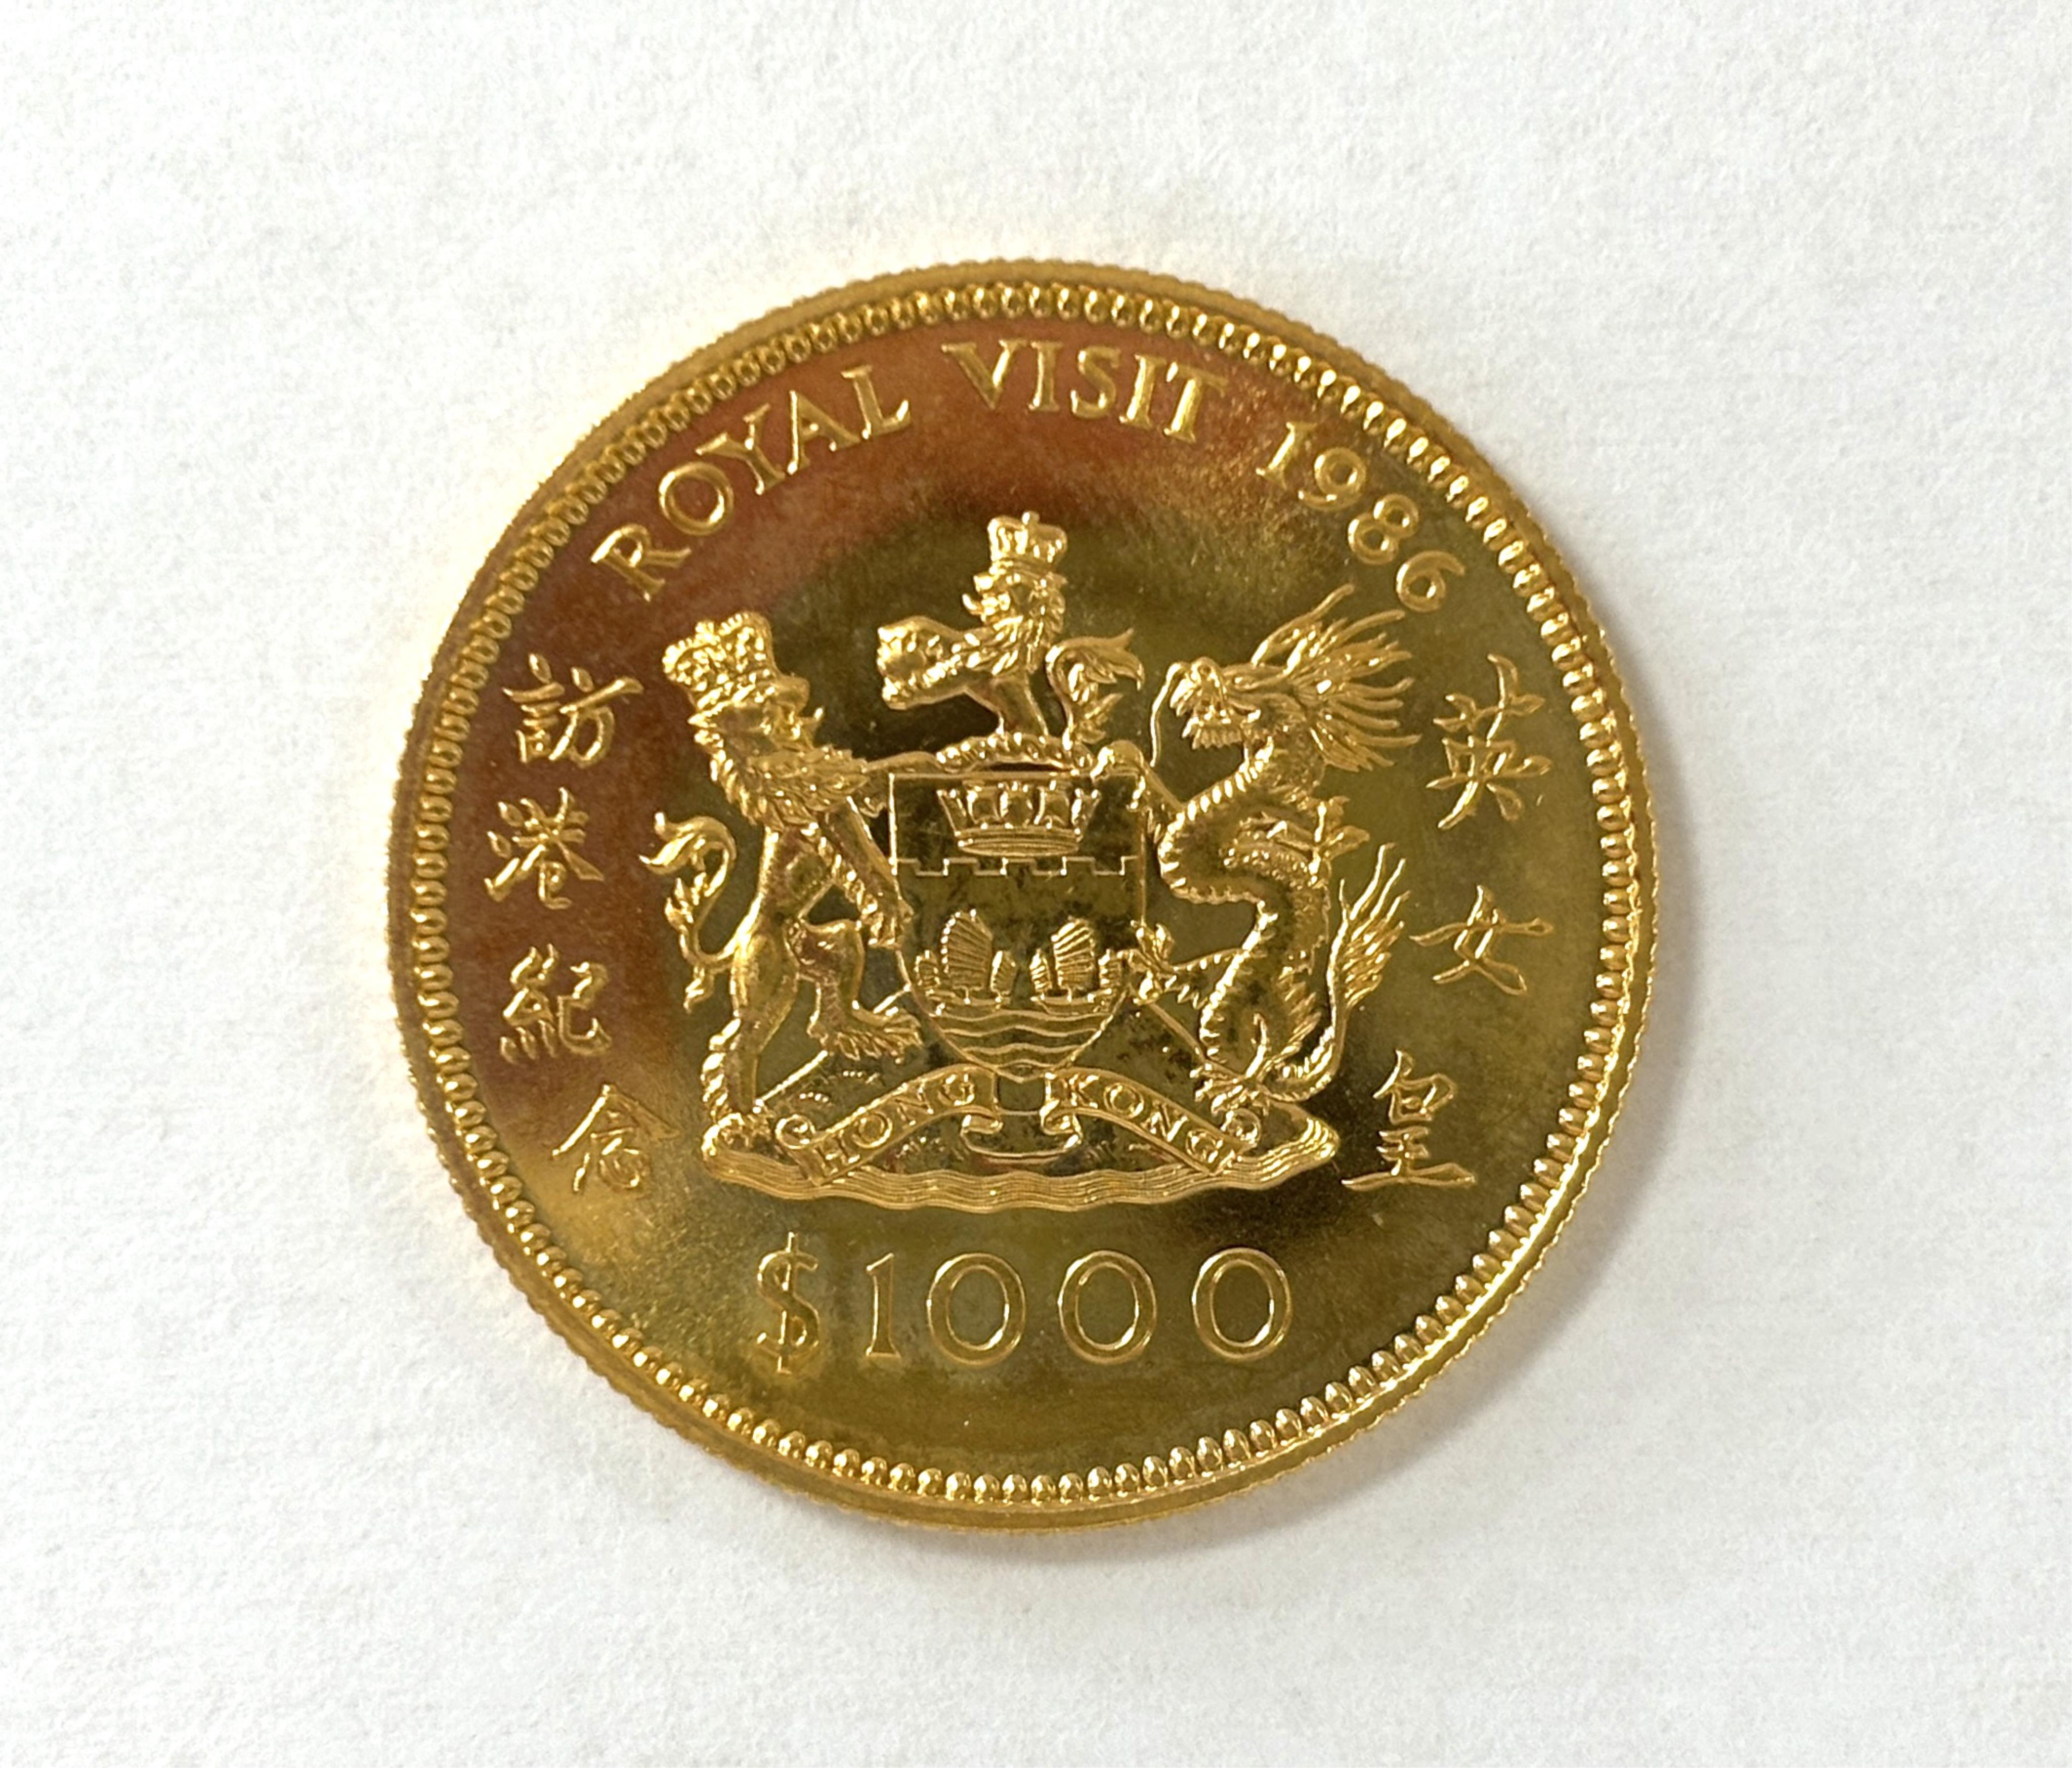 Gold coins, Hong Kong gold 1000 dollars commemorating the Royal visit of QEII, 1986, 15.97 grams, BUNC